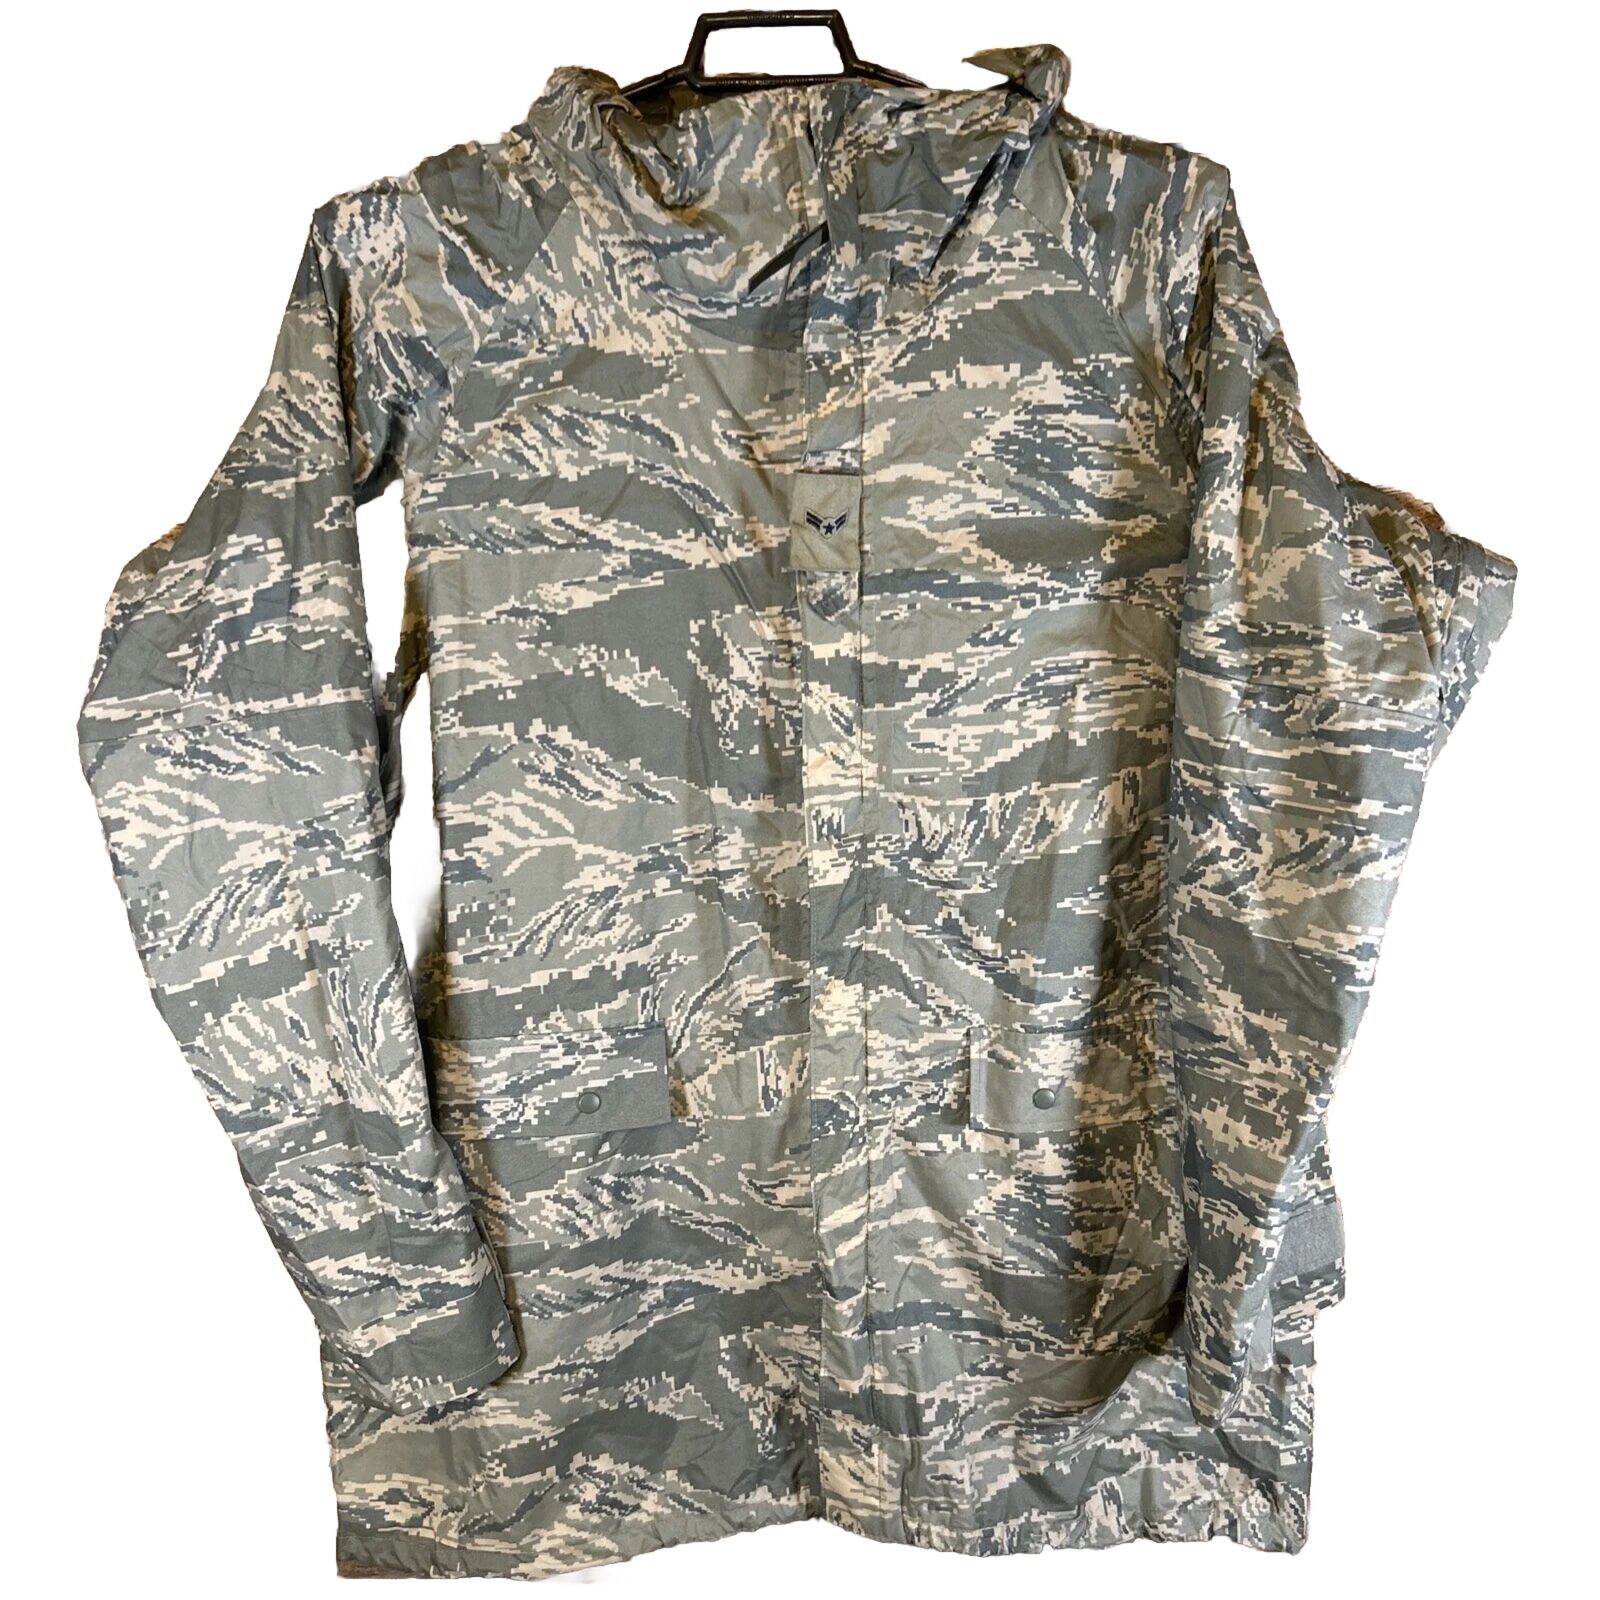 New ORC Military Parka Improved Rainsuit Jacket Medium Green Camouflage - AC